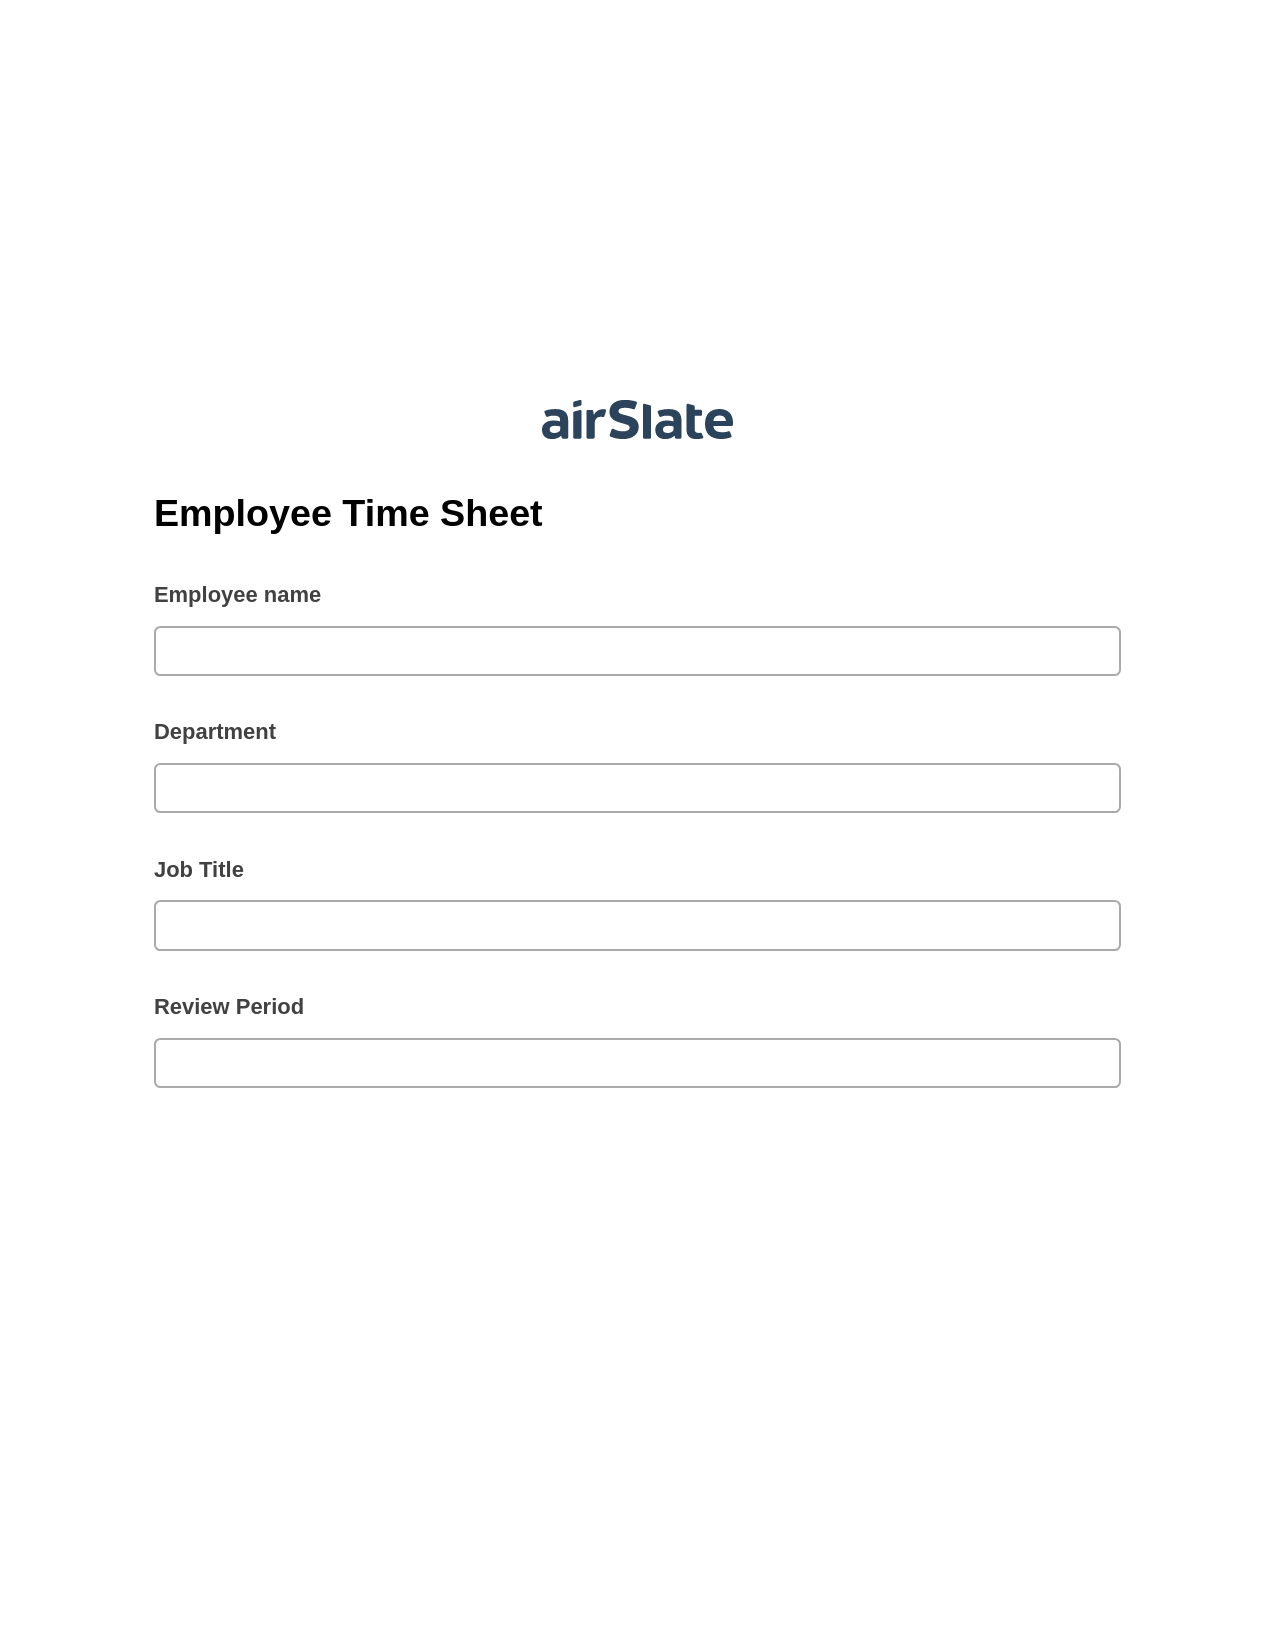 Multirole Employee Time Sheet Pre-fill from Smartsheet Bot, Update Audit Trail Bot, Archive to Dropbox Bot